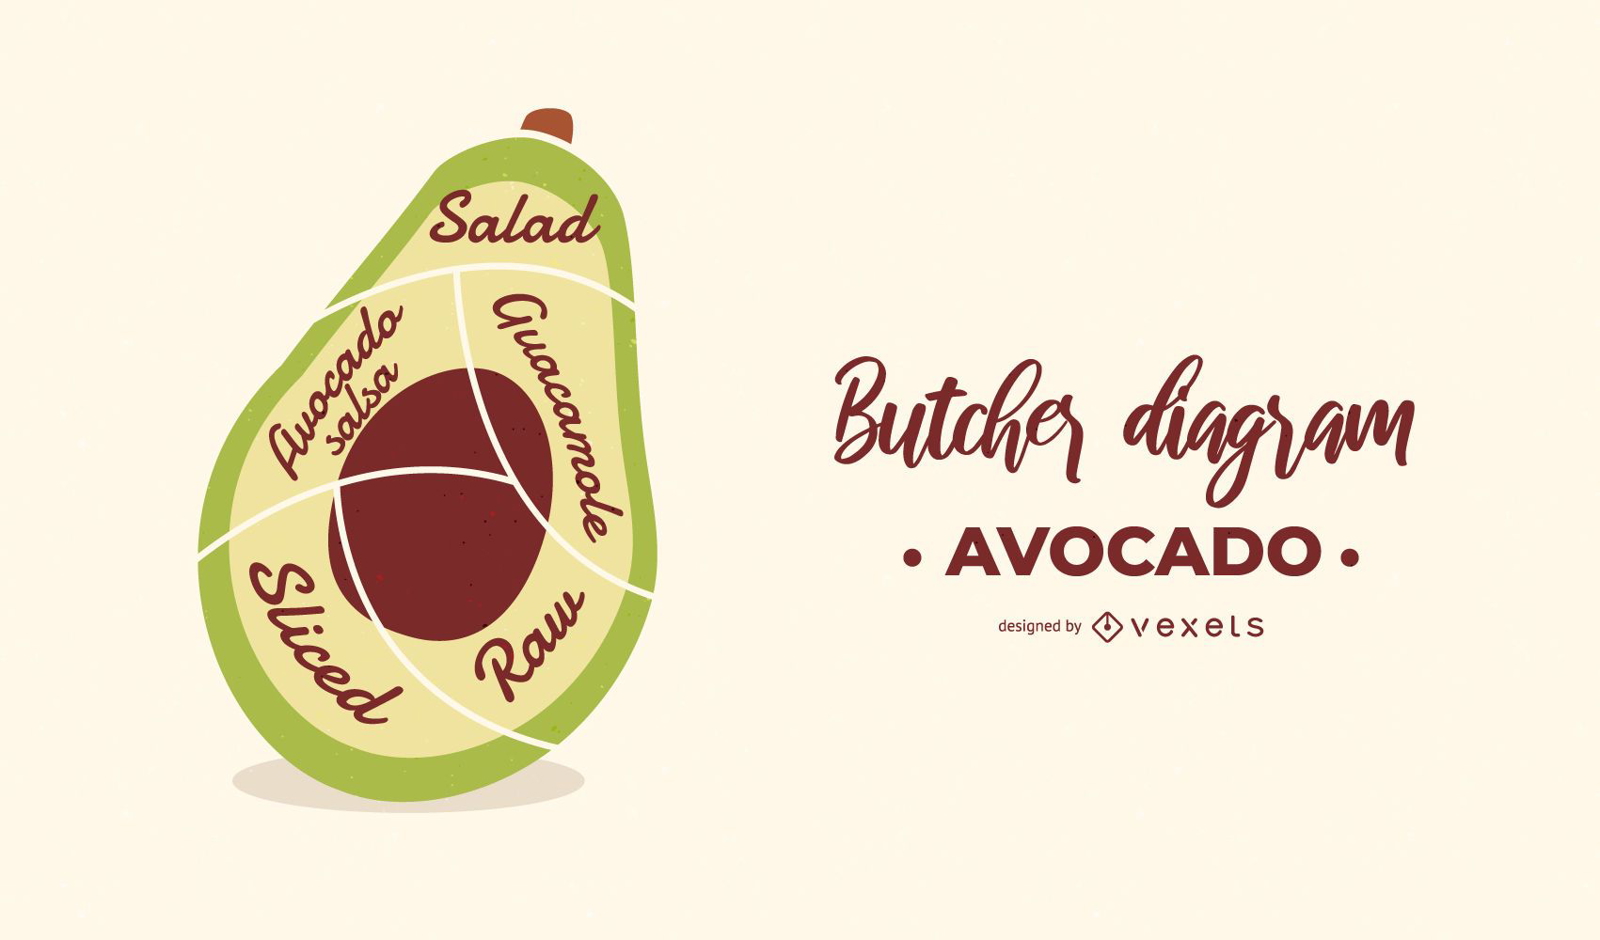 Avocado Butcher Diagram Design